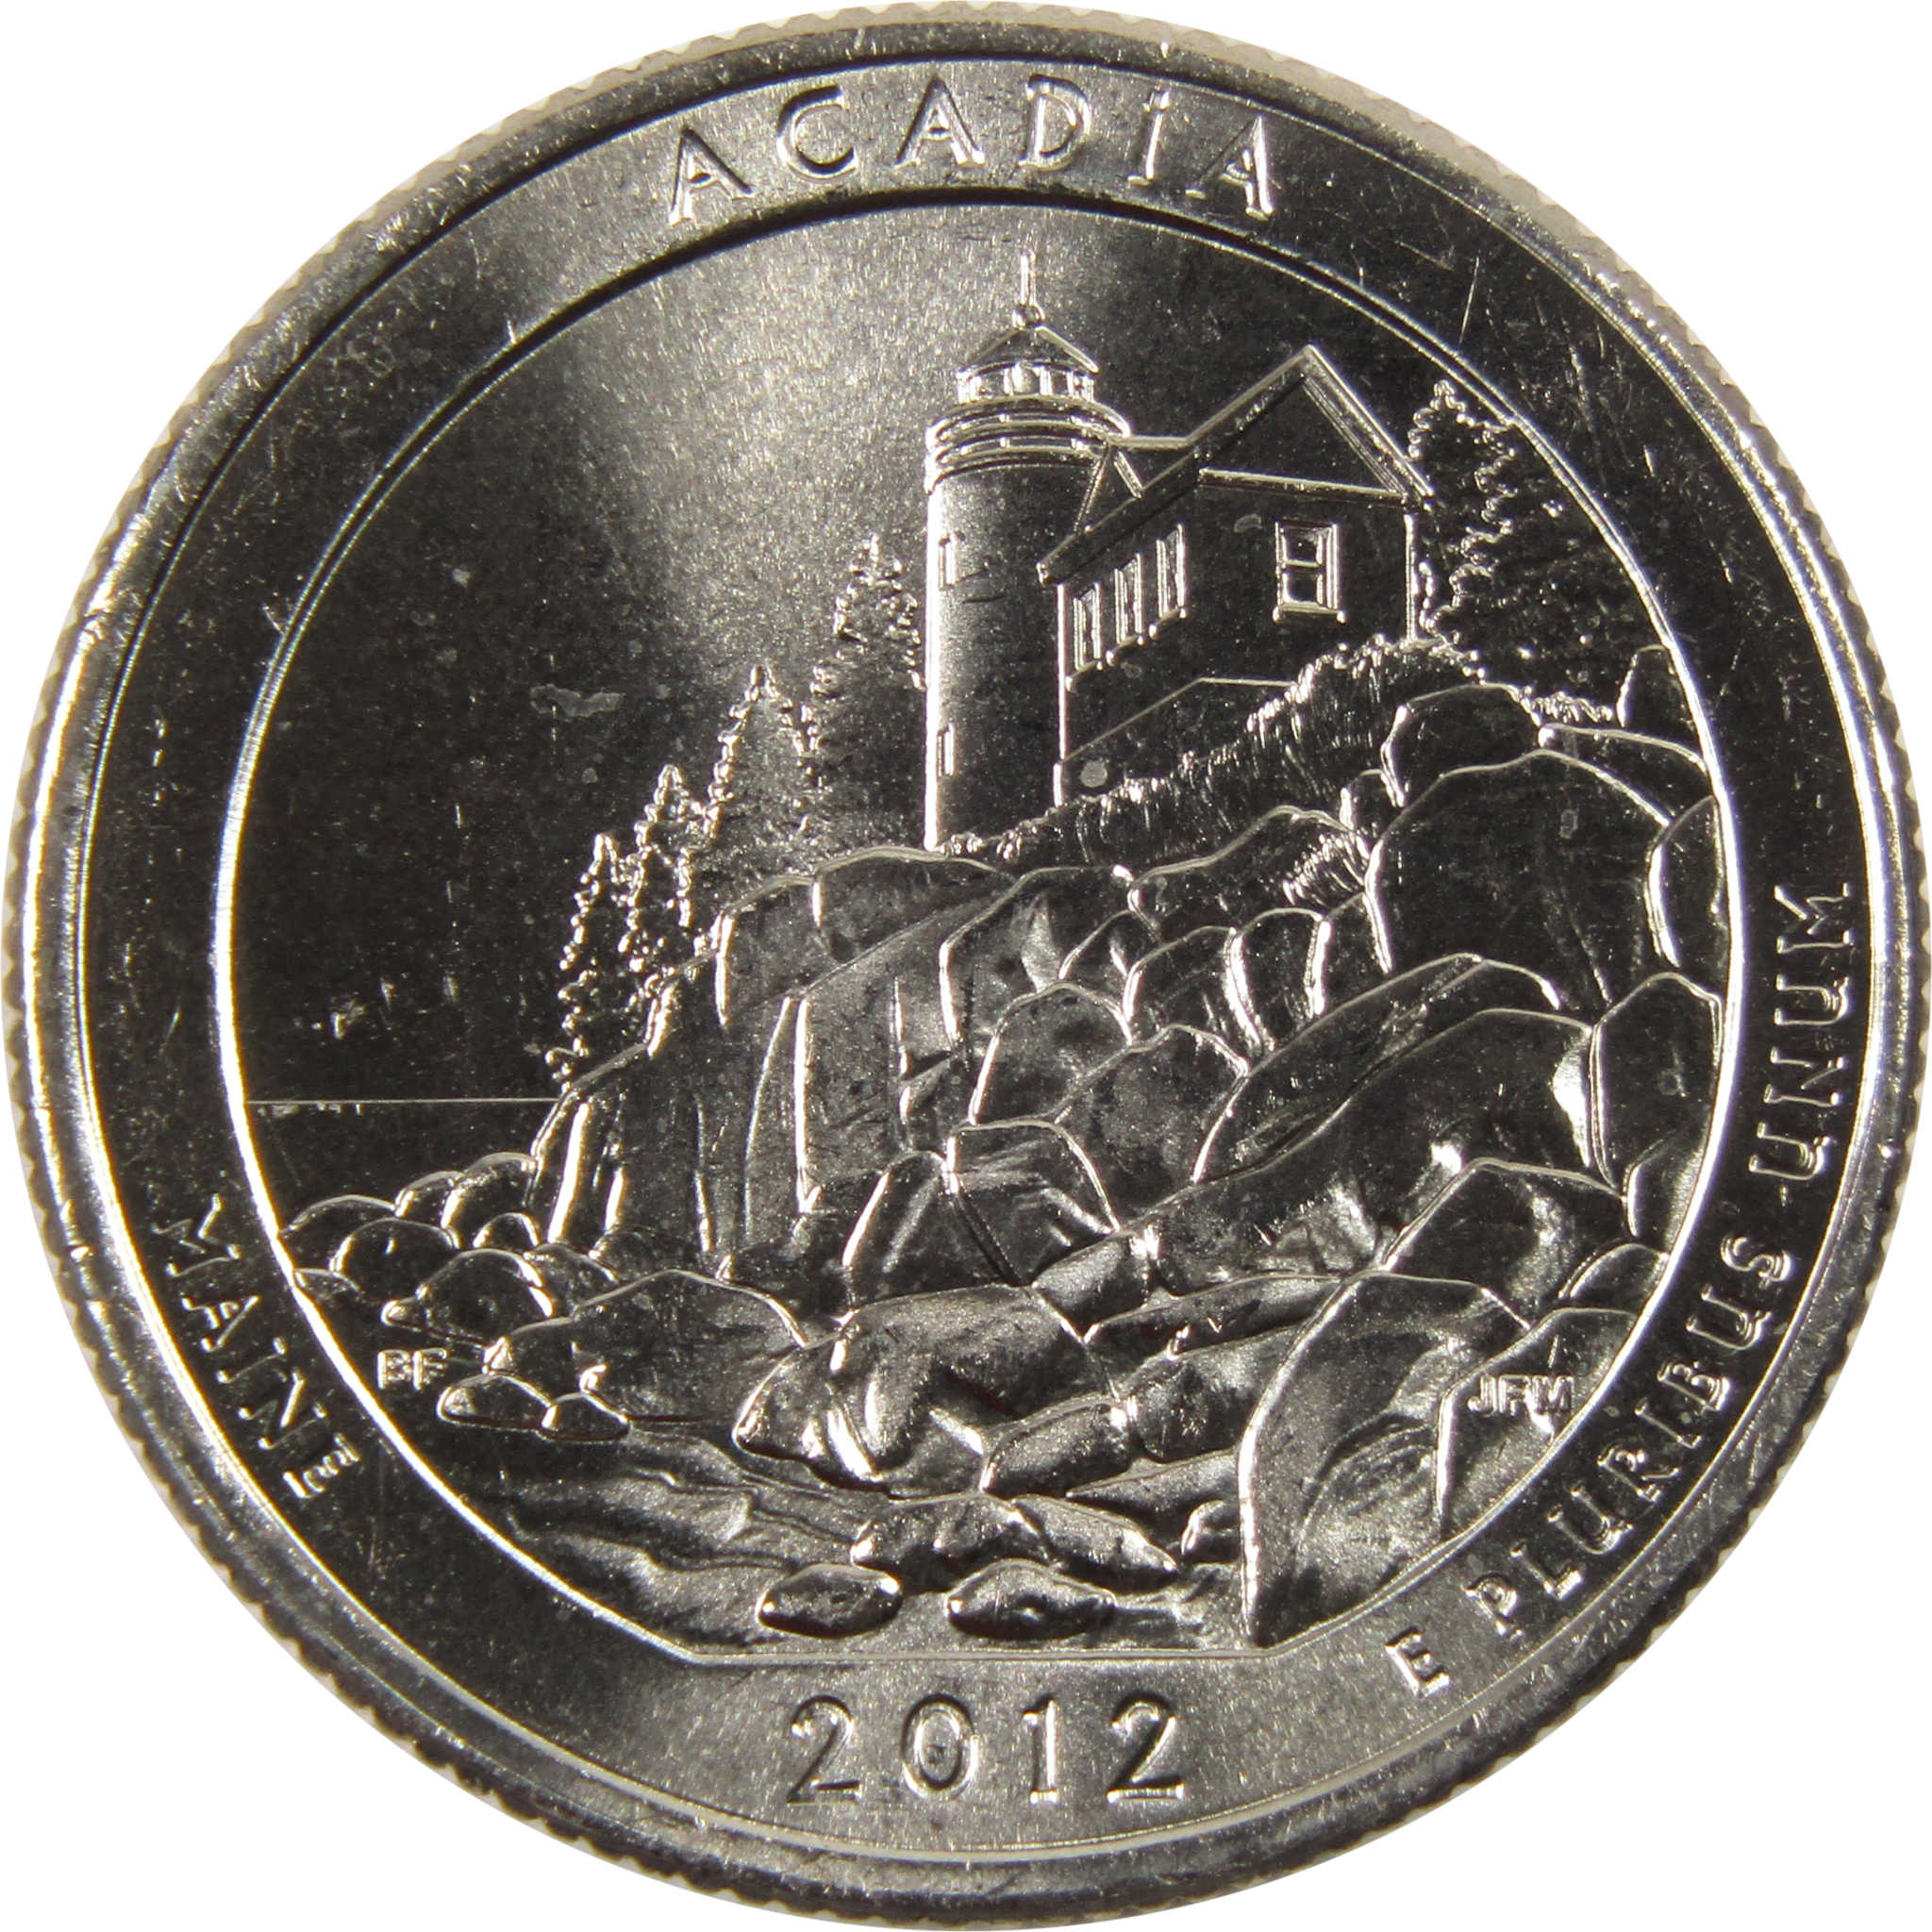 2012 P Acadia National Park Quarter BU Uncirculated Clad 25c Coin